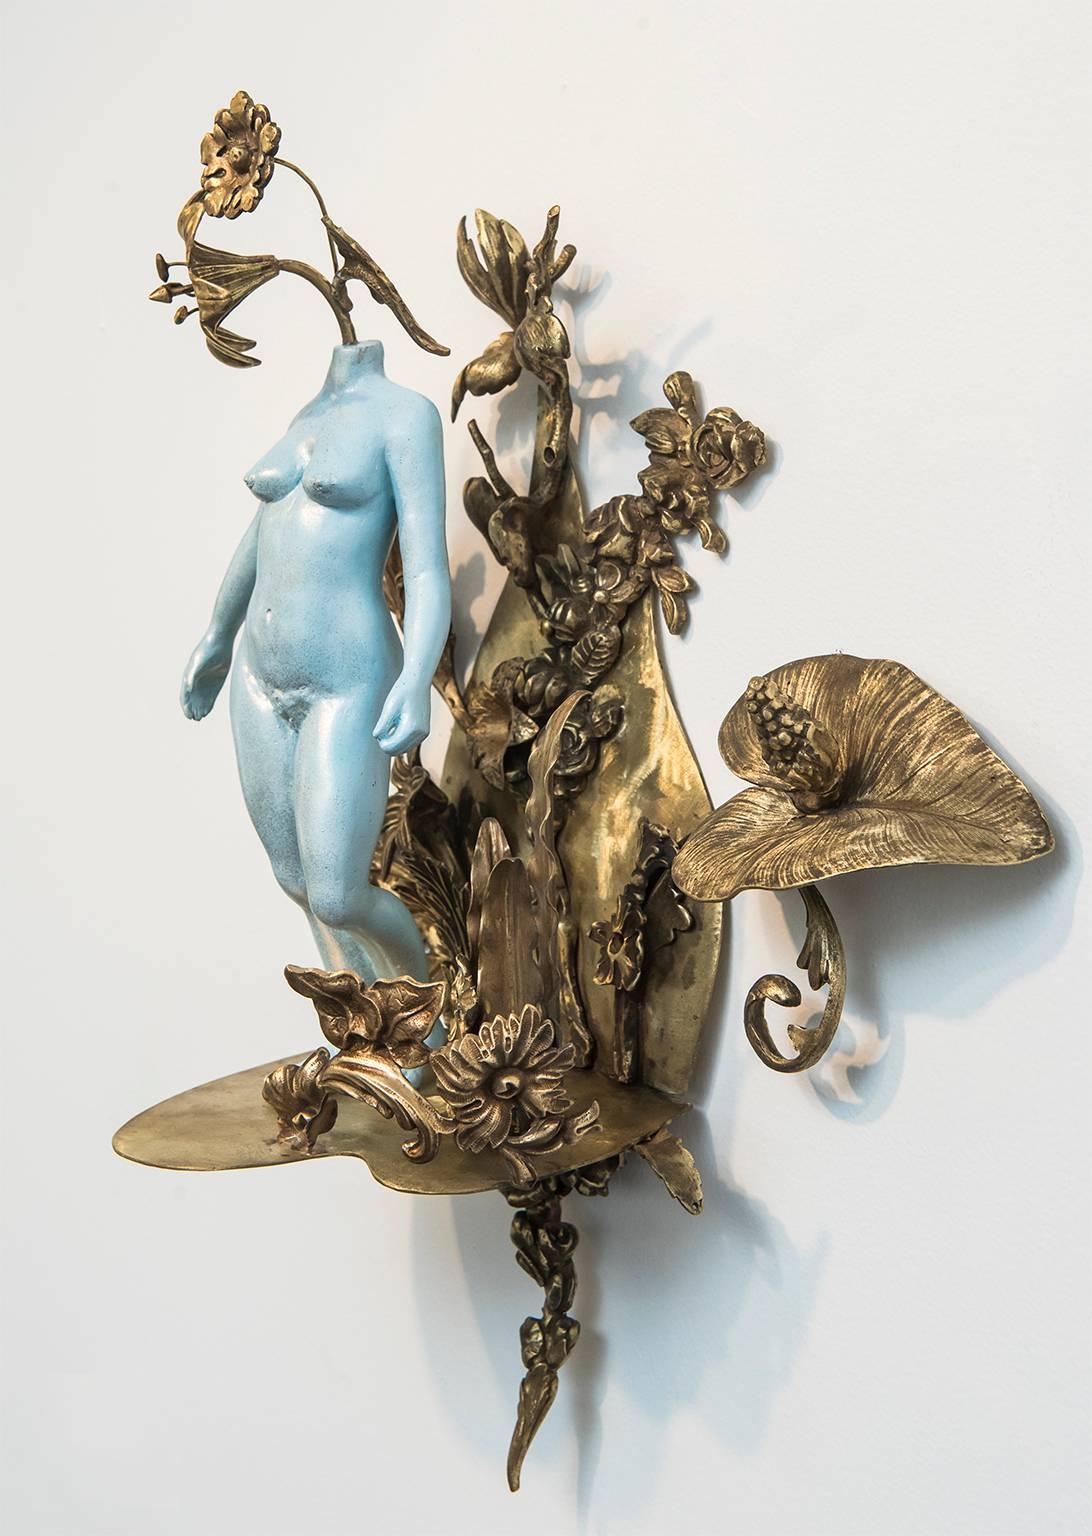 Lannie Hart Figurative Sculpture - Sightings 1